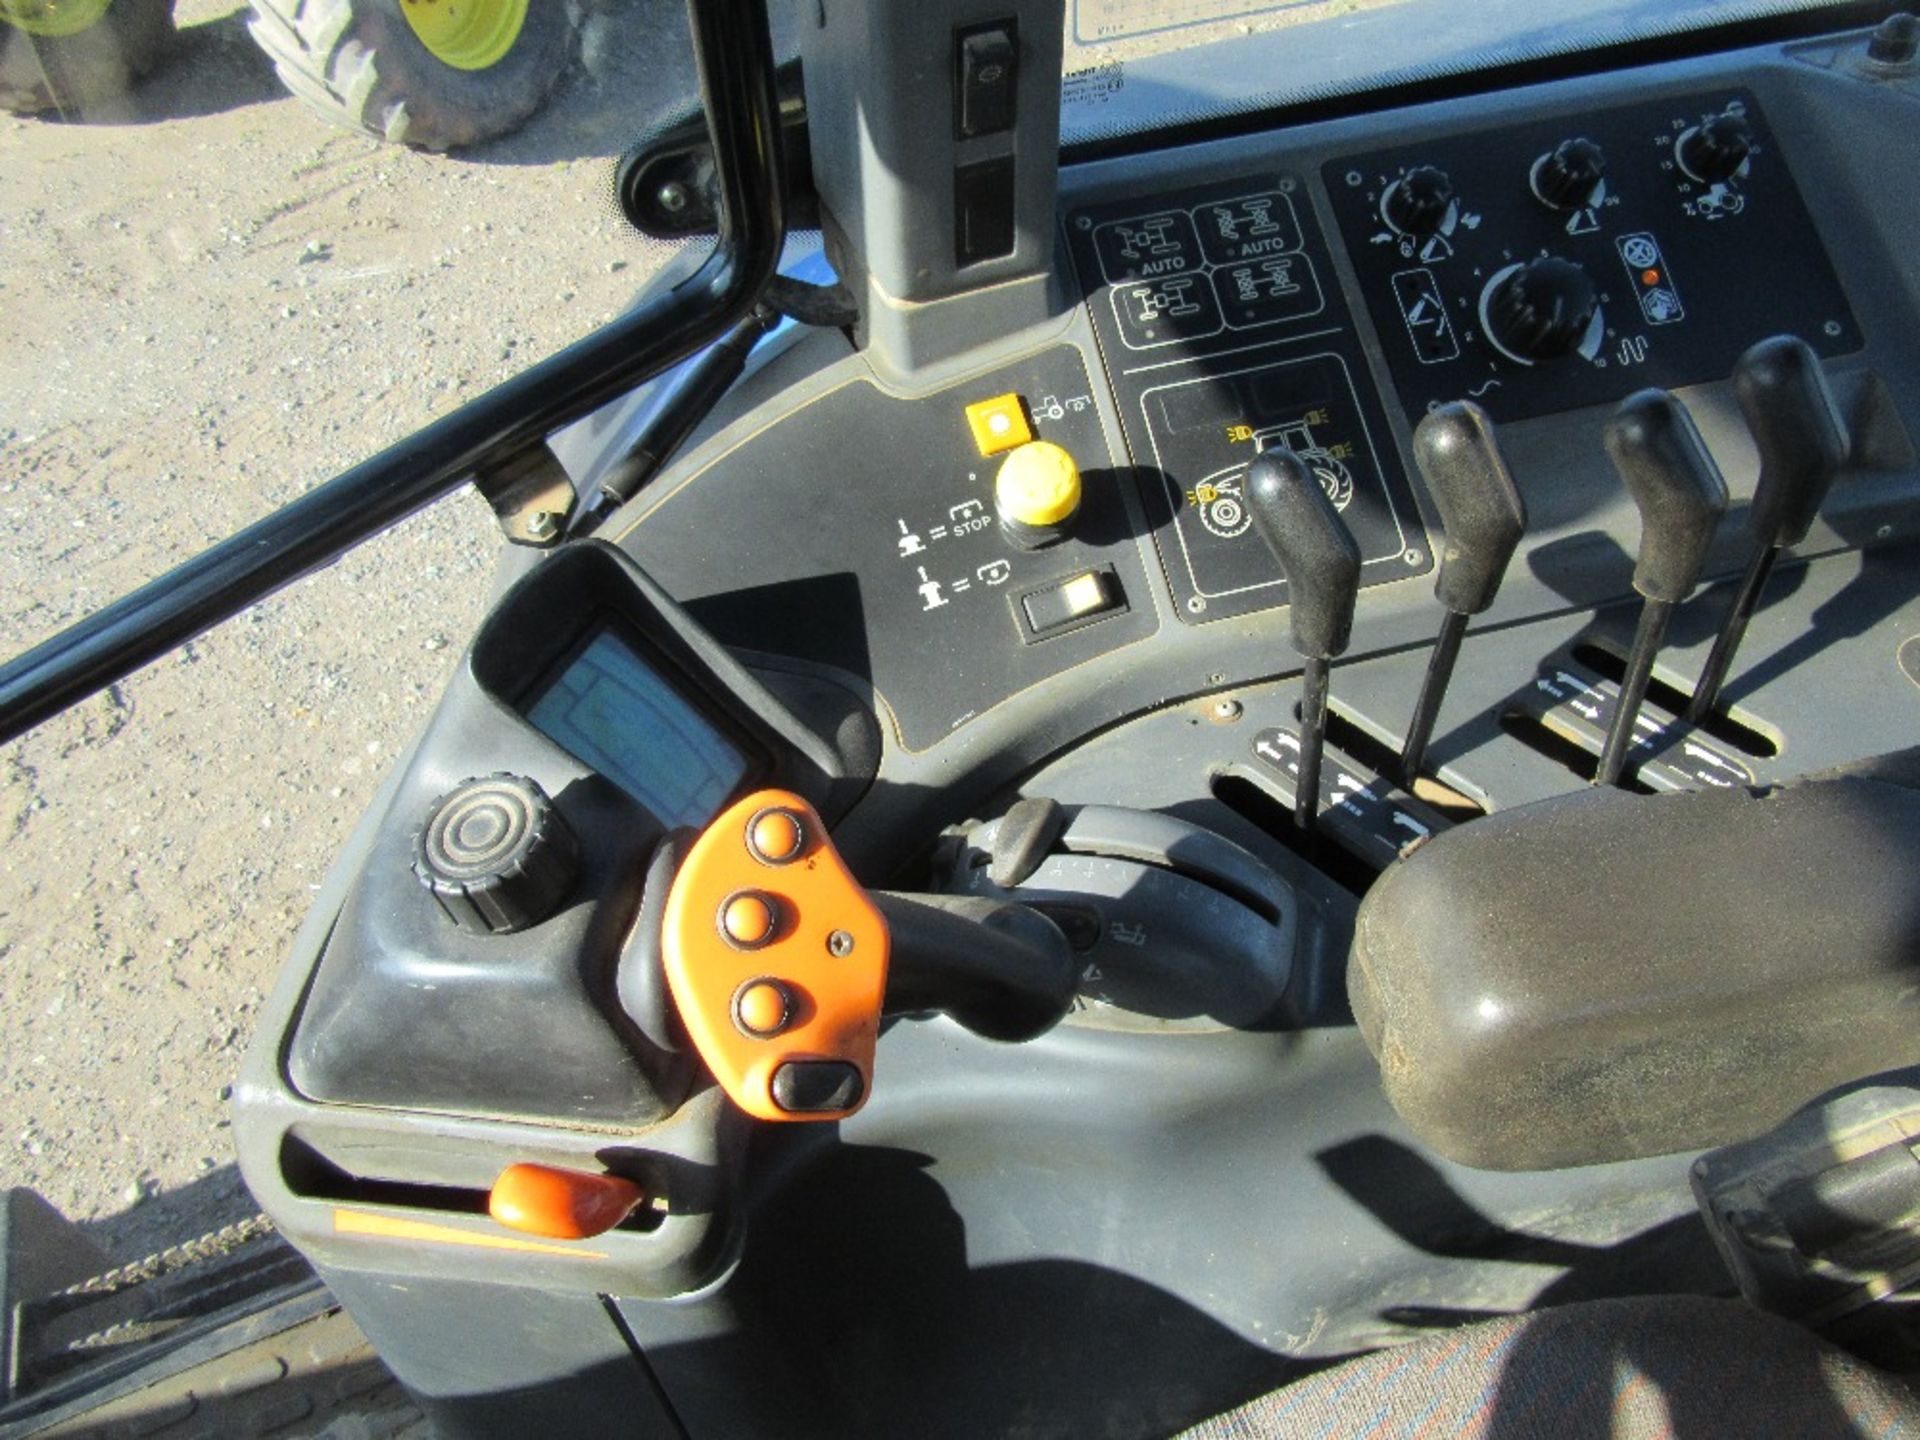 2003 New Holland TM190 4wd Power Command Tractor, Manual Spools Reg No NU52 UFN Ser No ACM199035 - Image 11 of 14